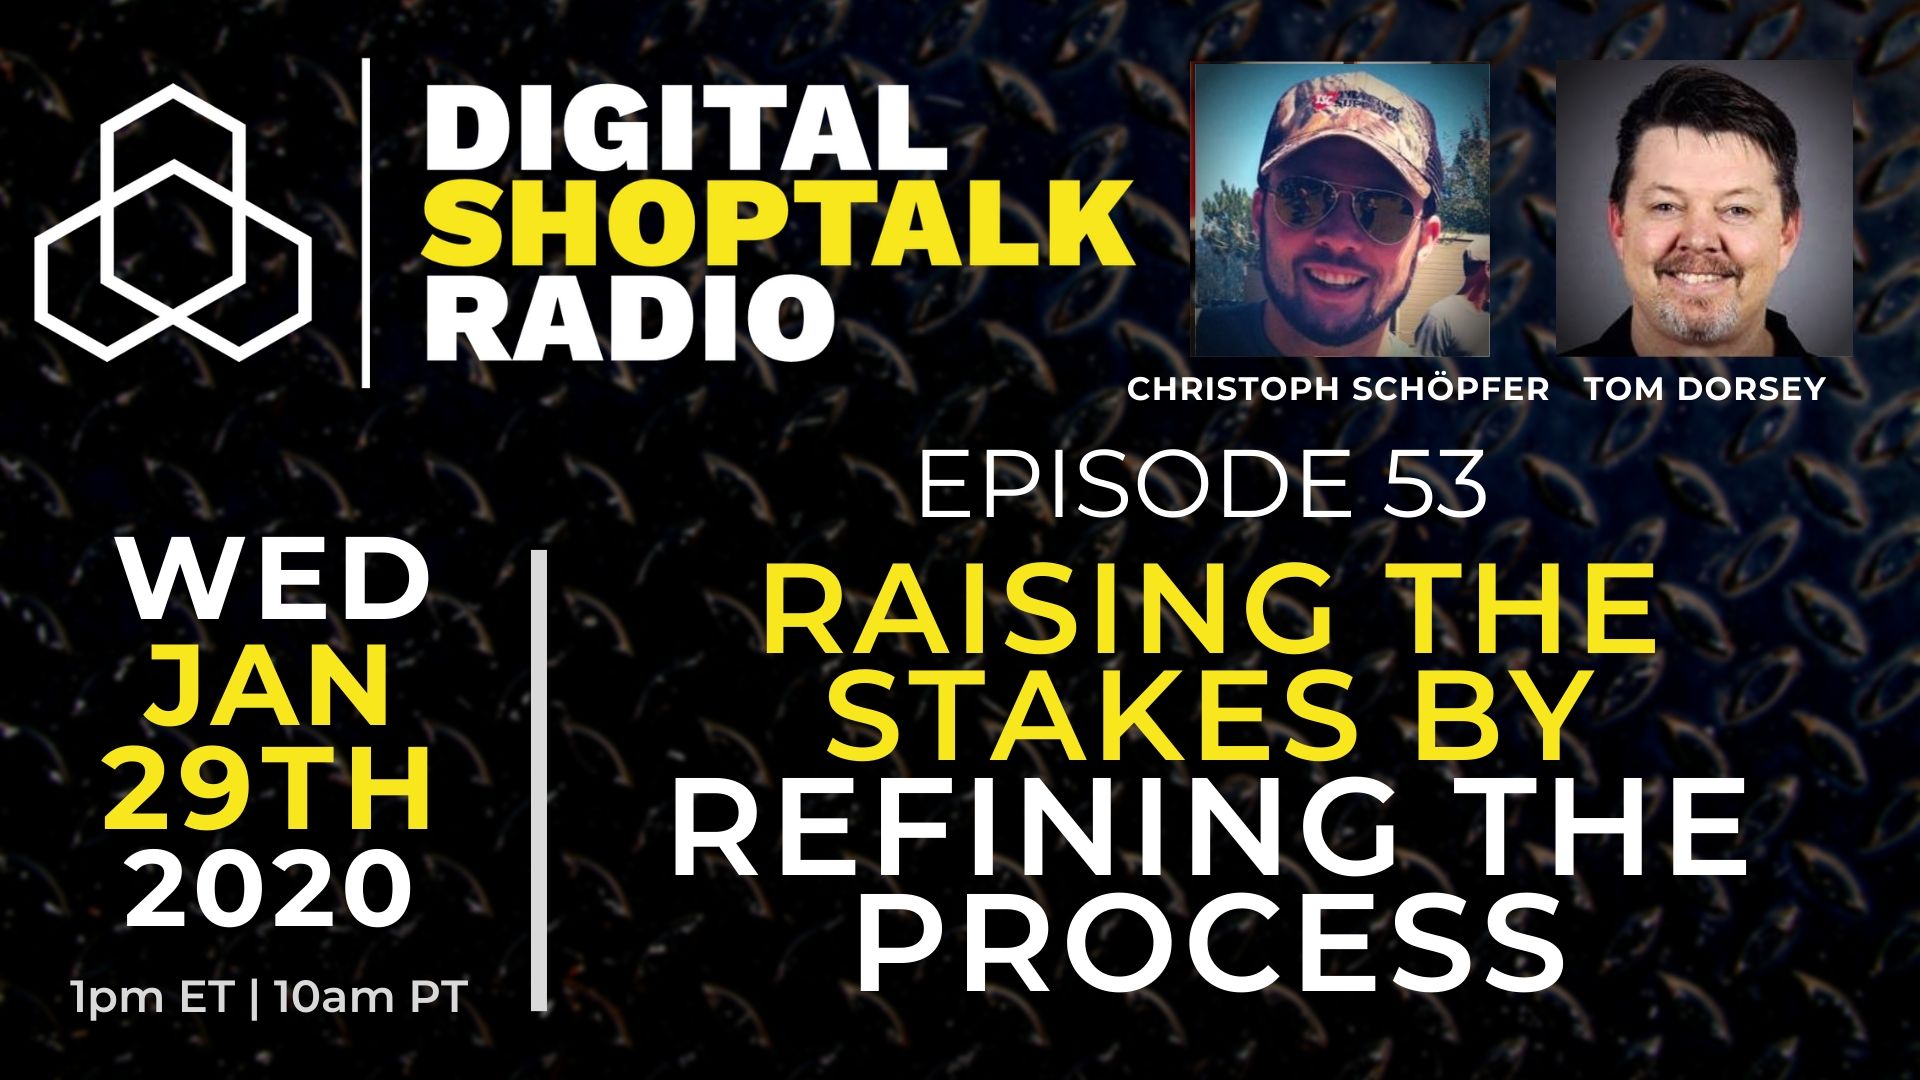 Promotional Graphic Digital Shop Talk Radio Episode 53.